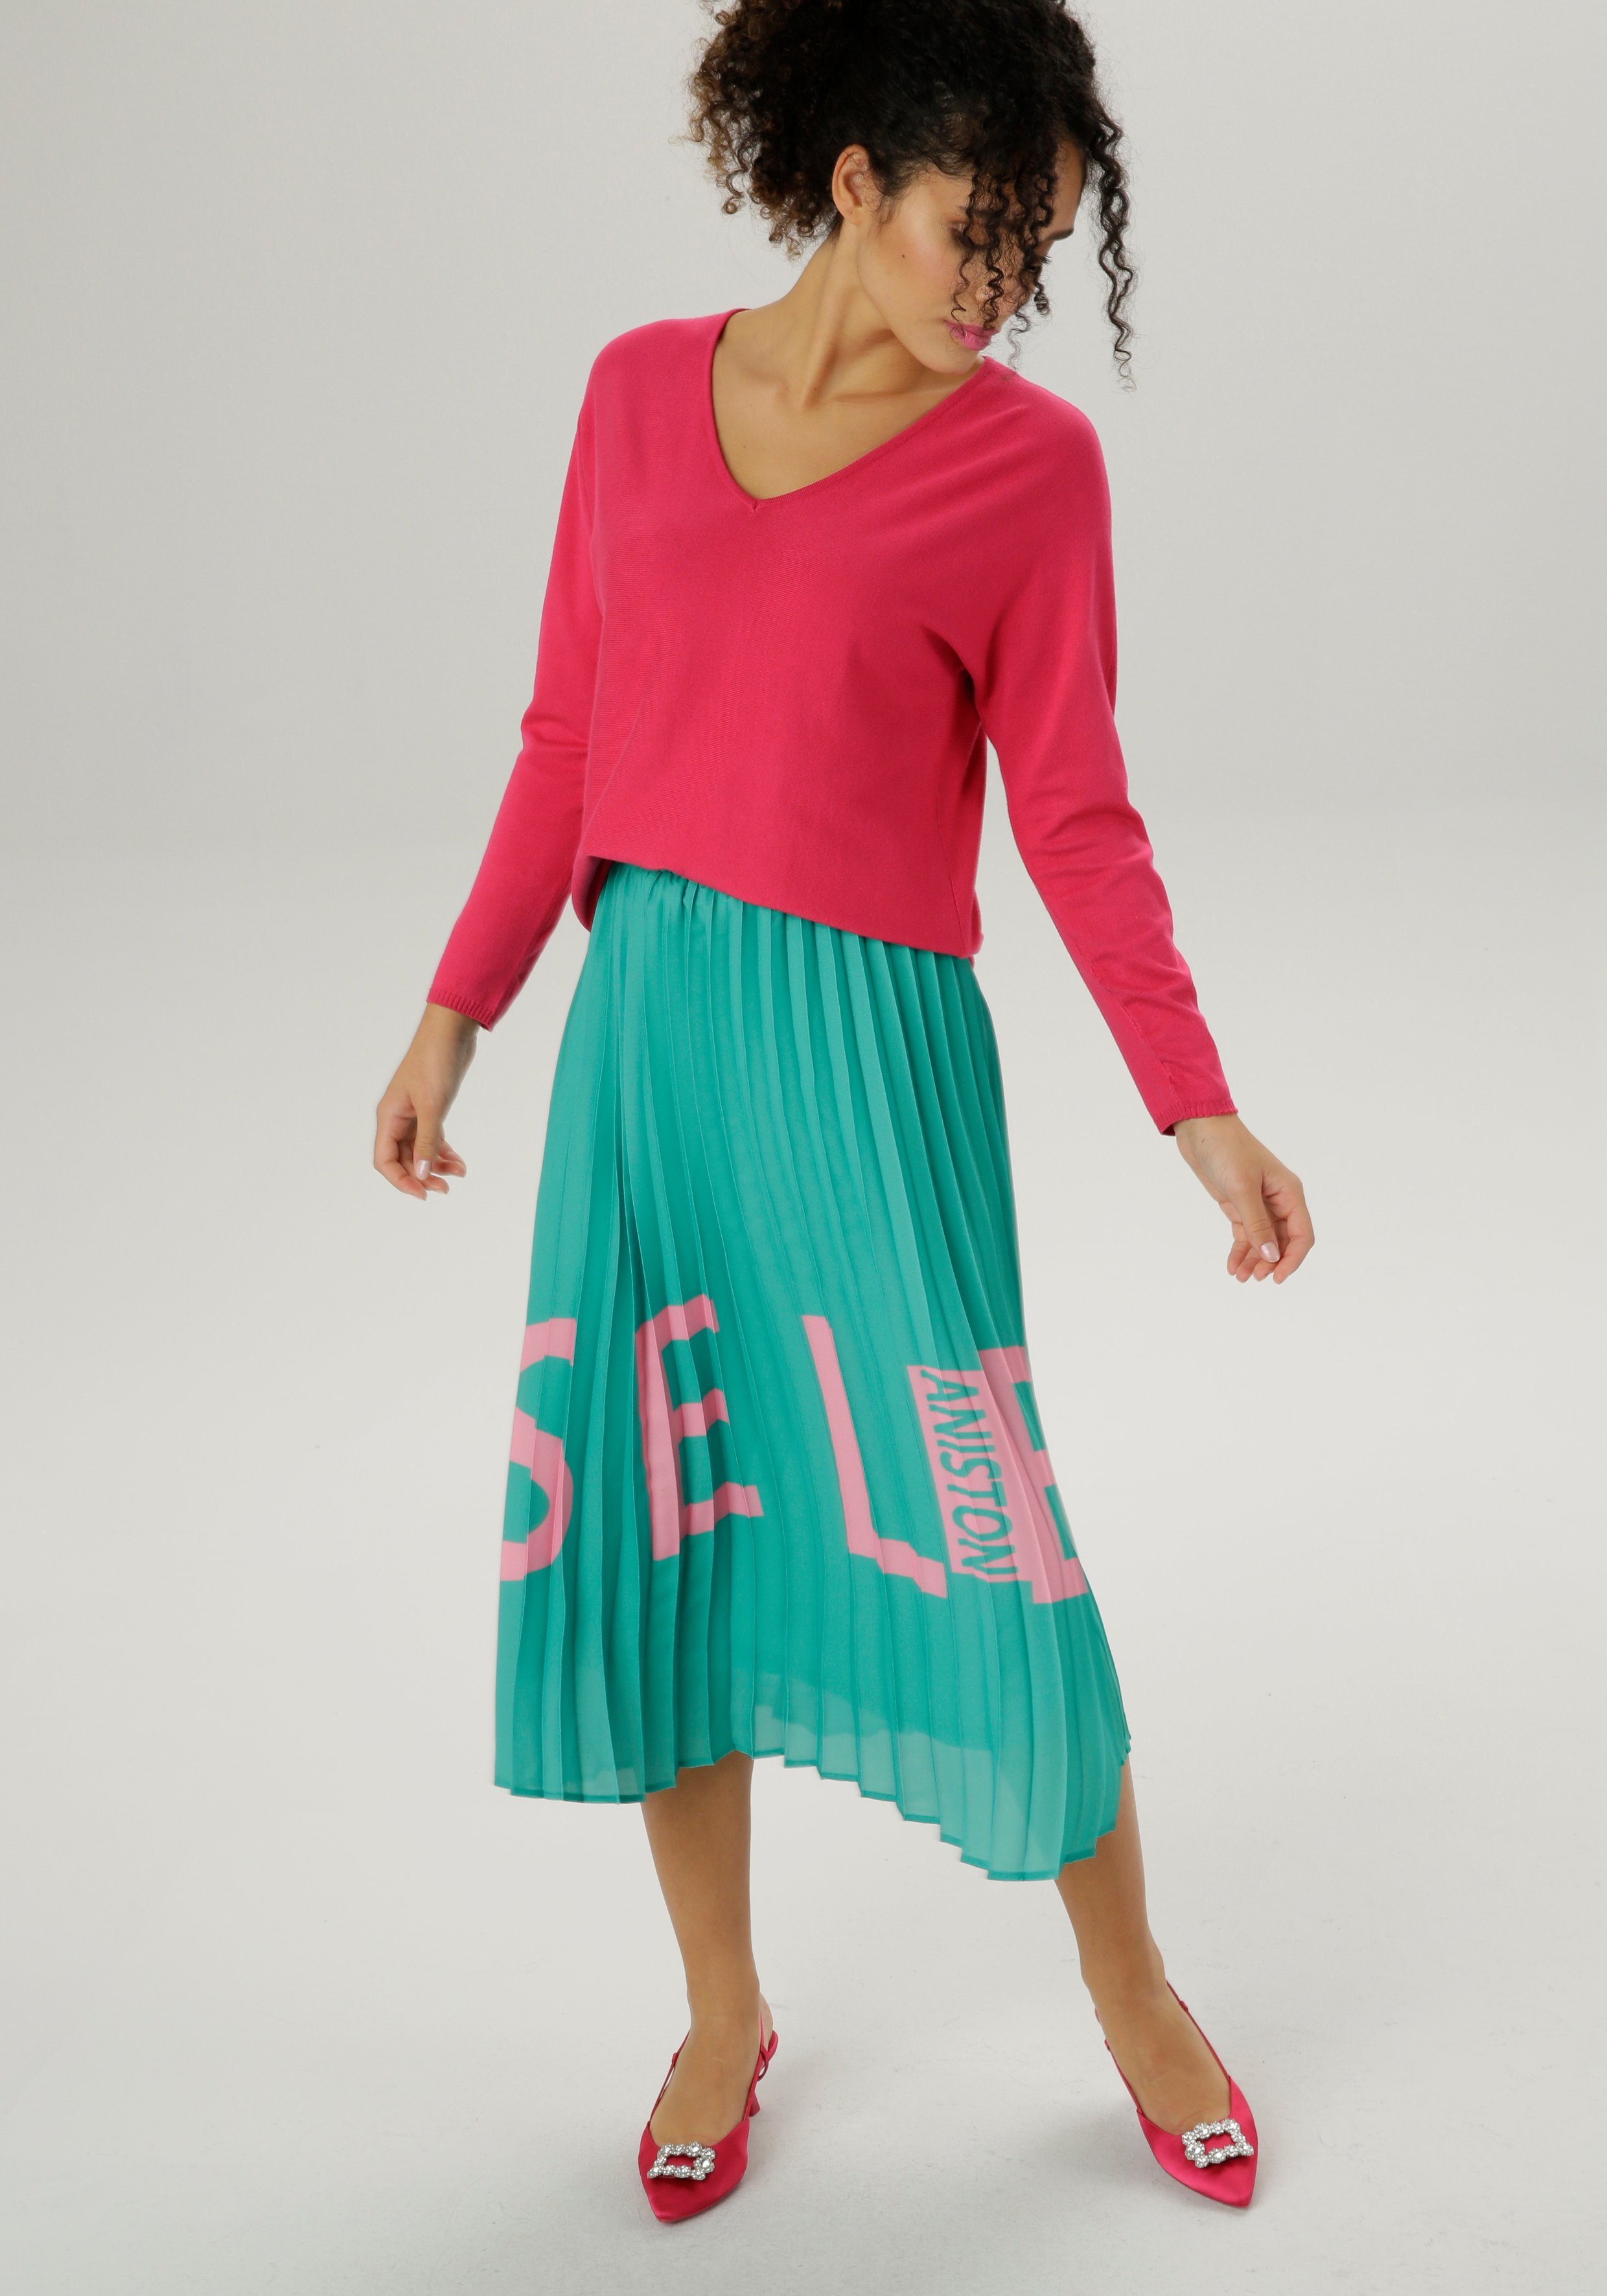 SELECTED in Plisseerock Markenschriftzug mit Knallfarbe Aniston grün-pink